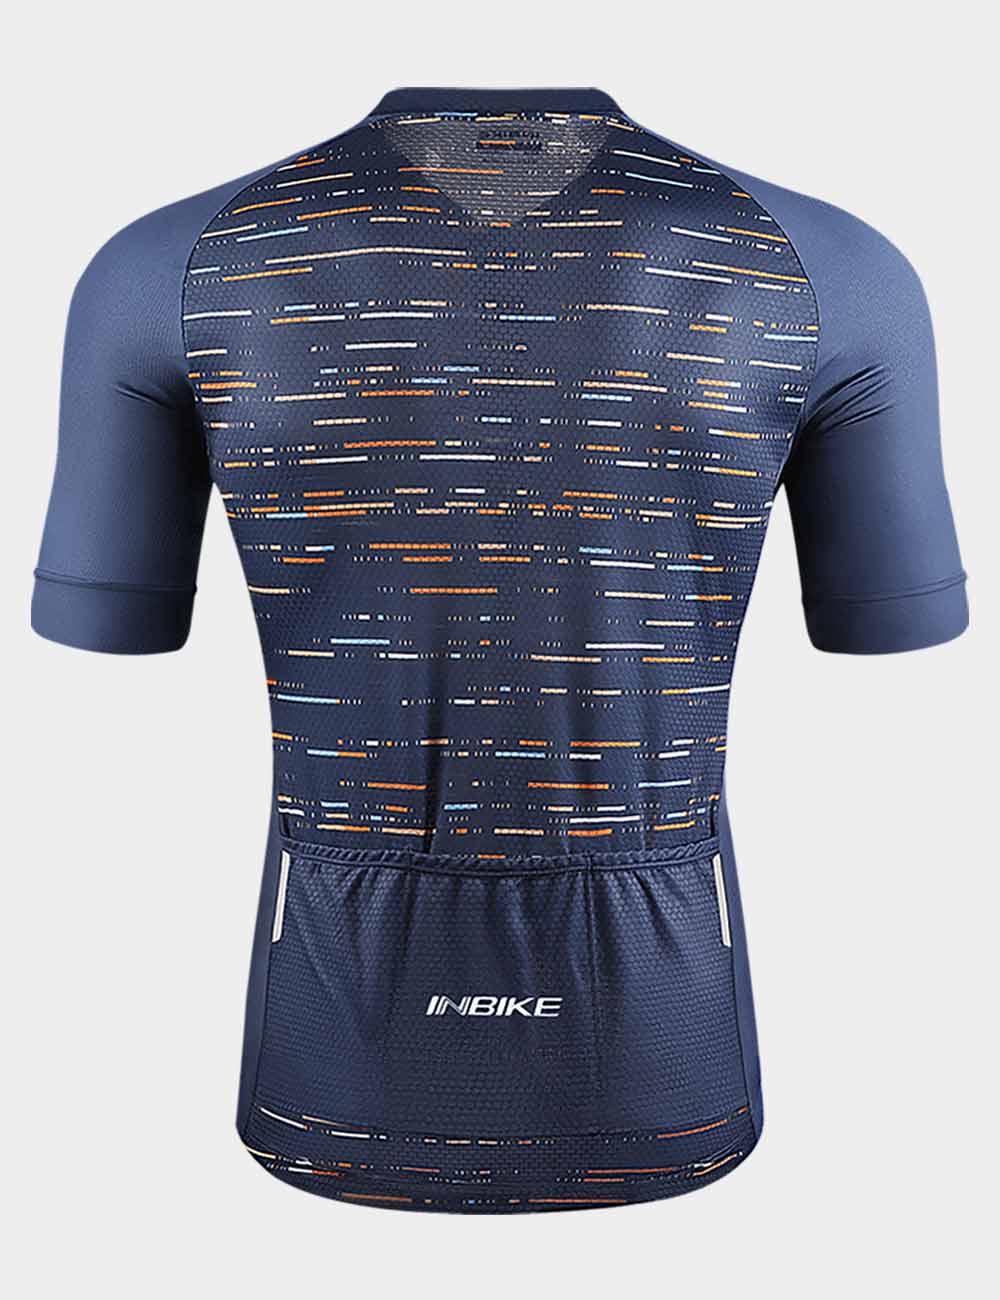 Details about   ZEROBIKE Men Cycling Jersey  Bike Clothing Half Sleeve Cycling Shorts Set UK 